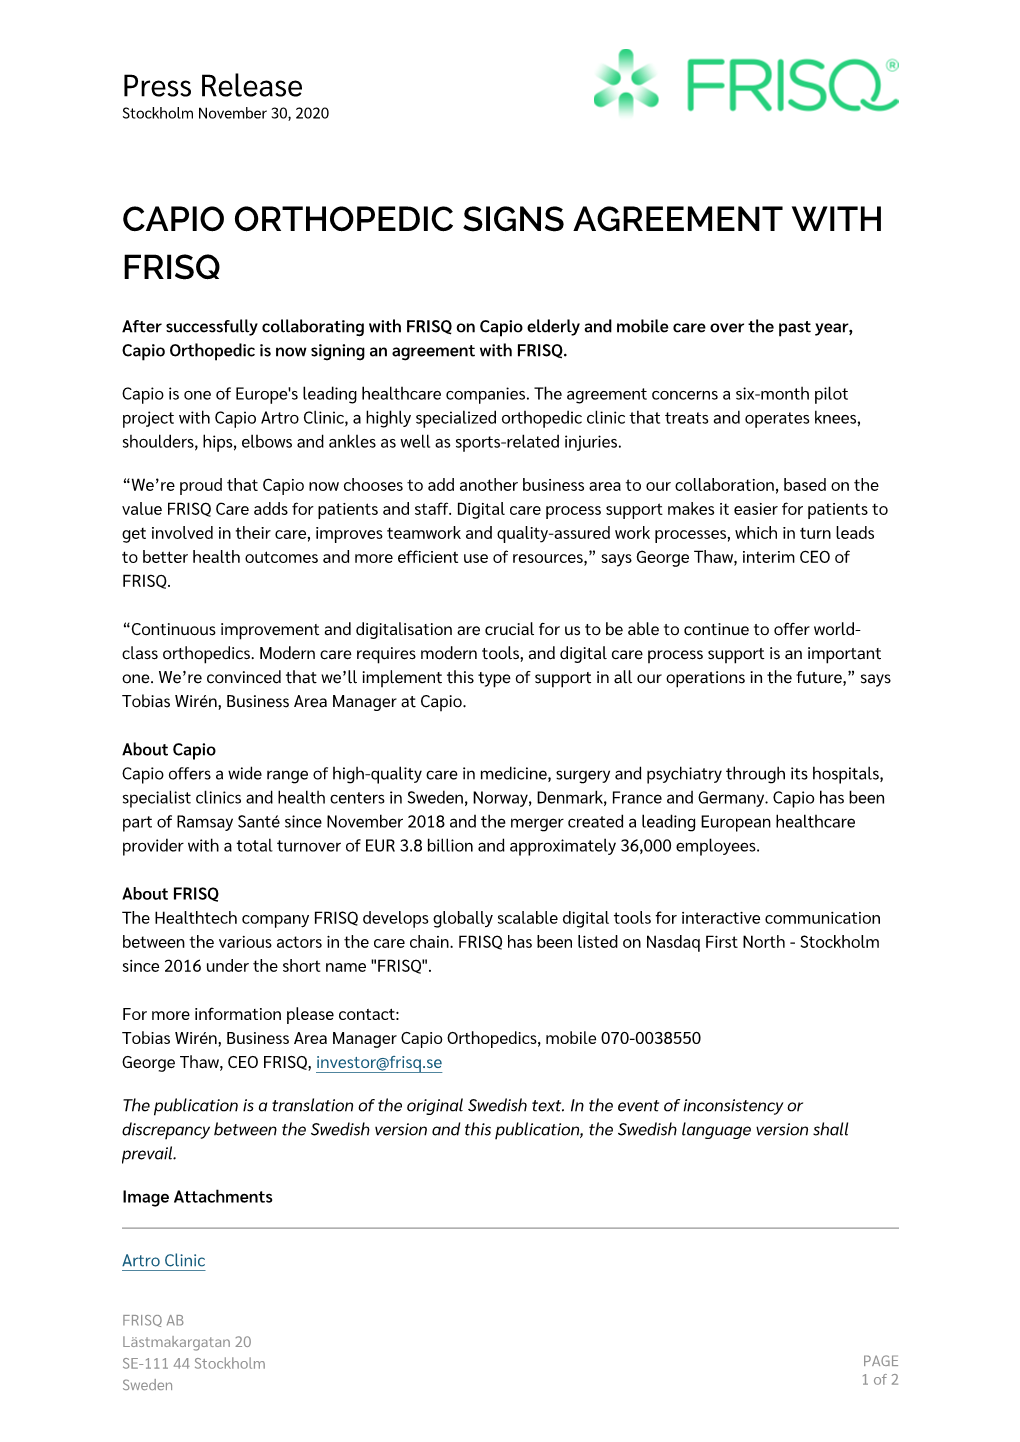 Capio Orthopedic Signs Agreement with Frisq